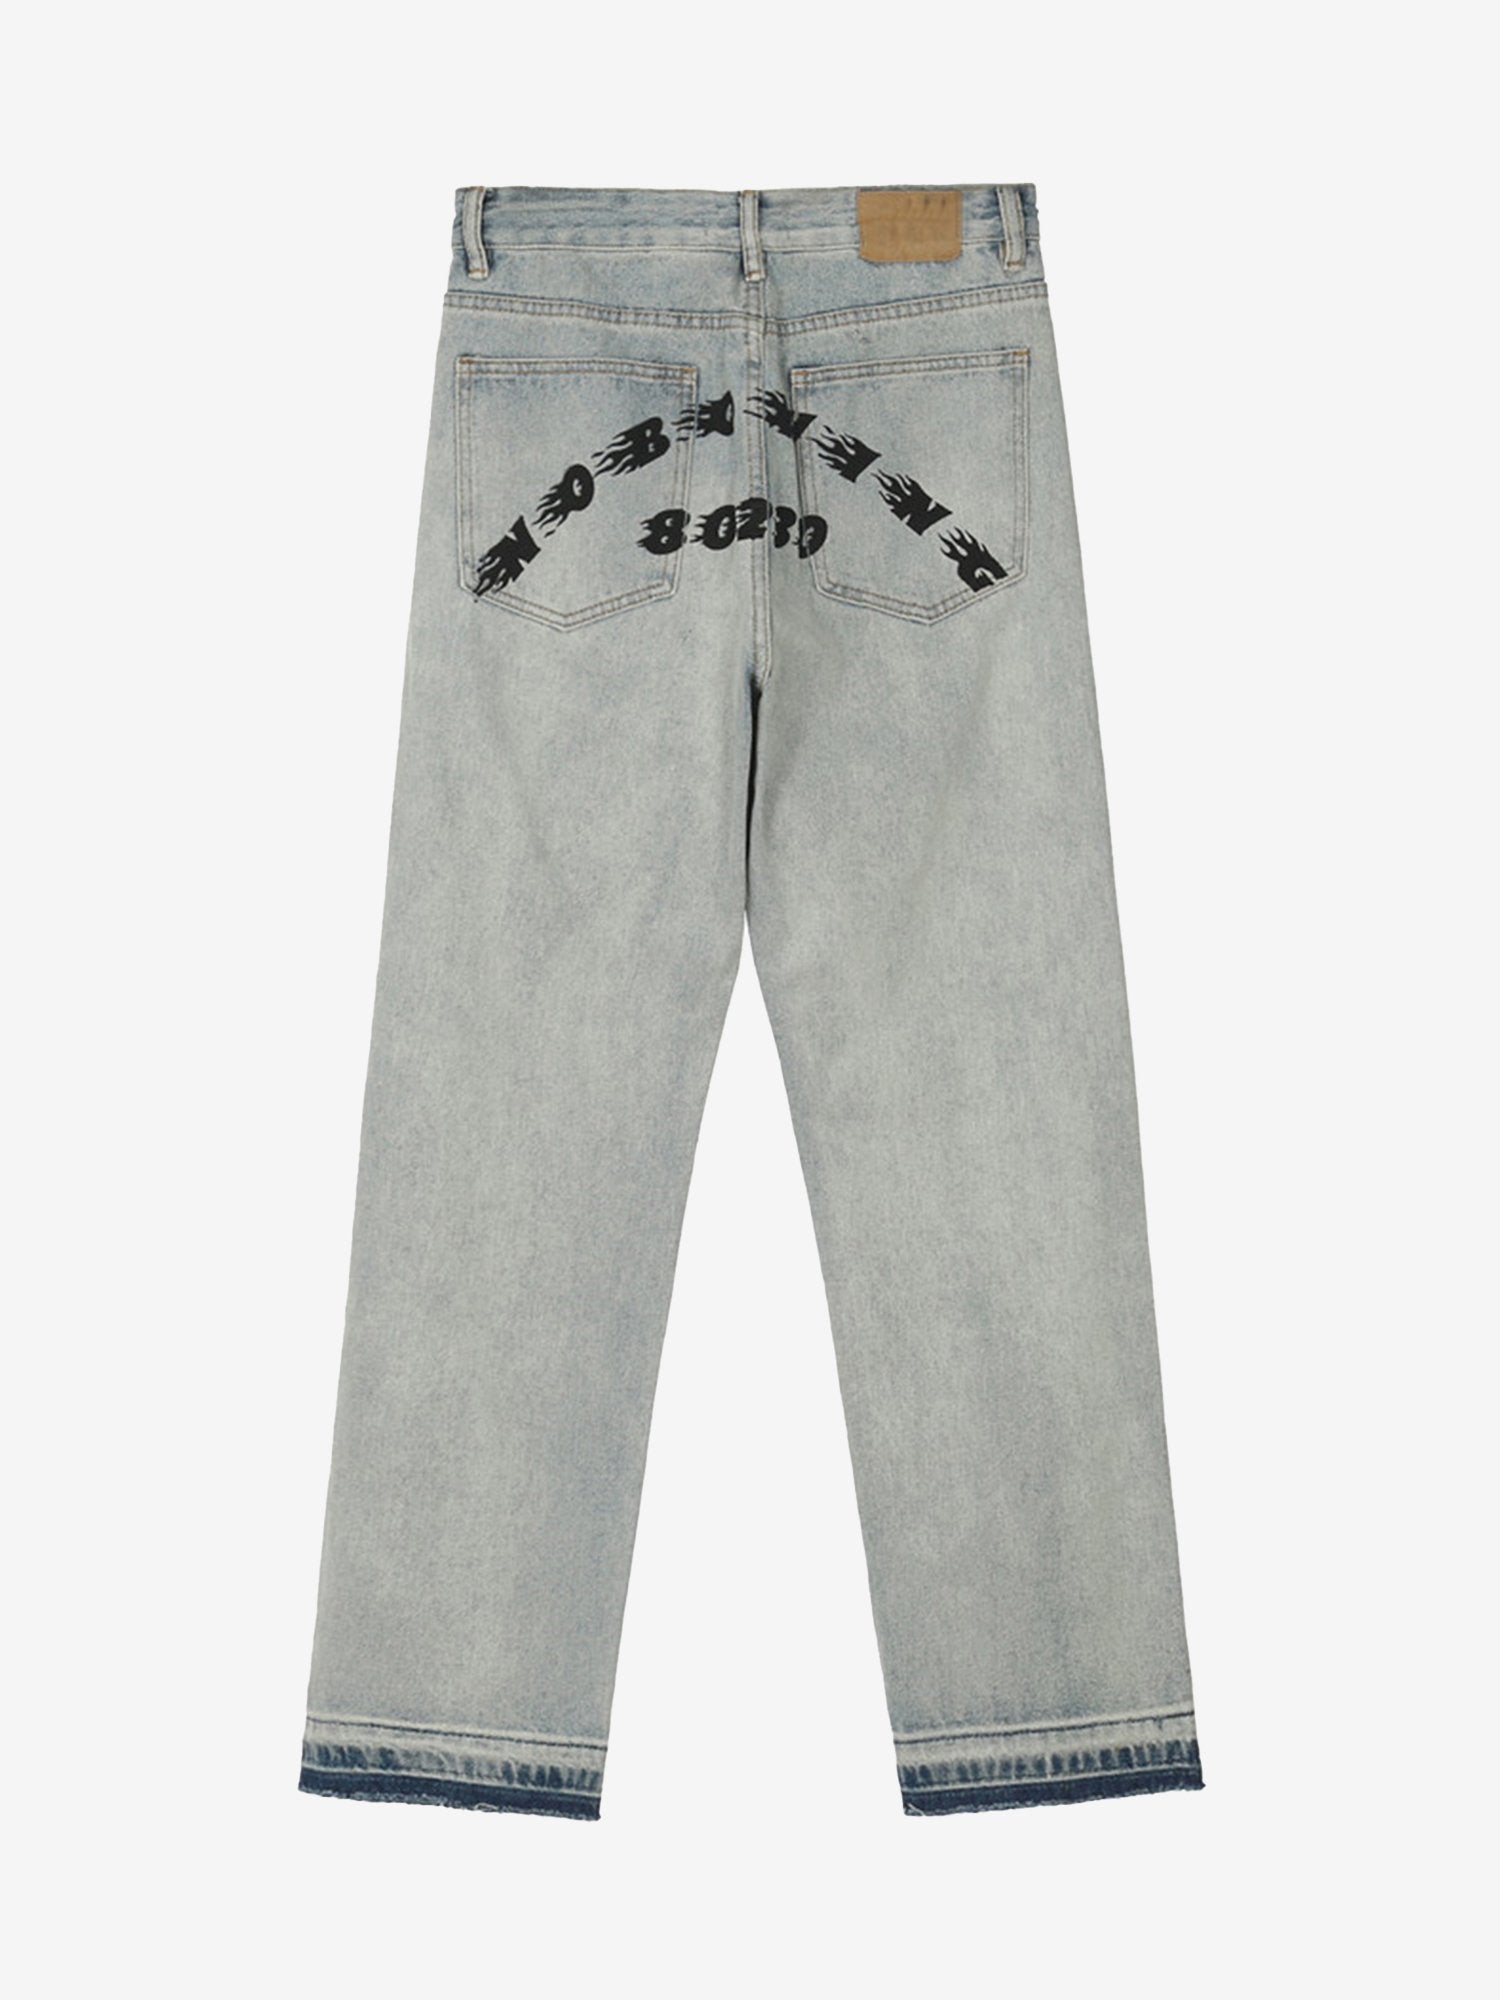 JUSTNOTAG Street Letter Cotton Zipper Jeans